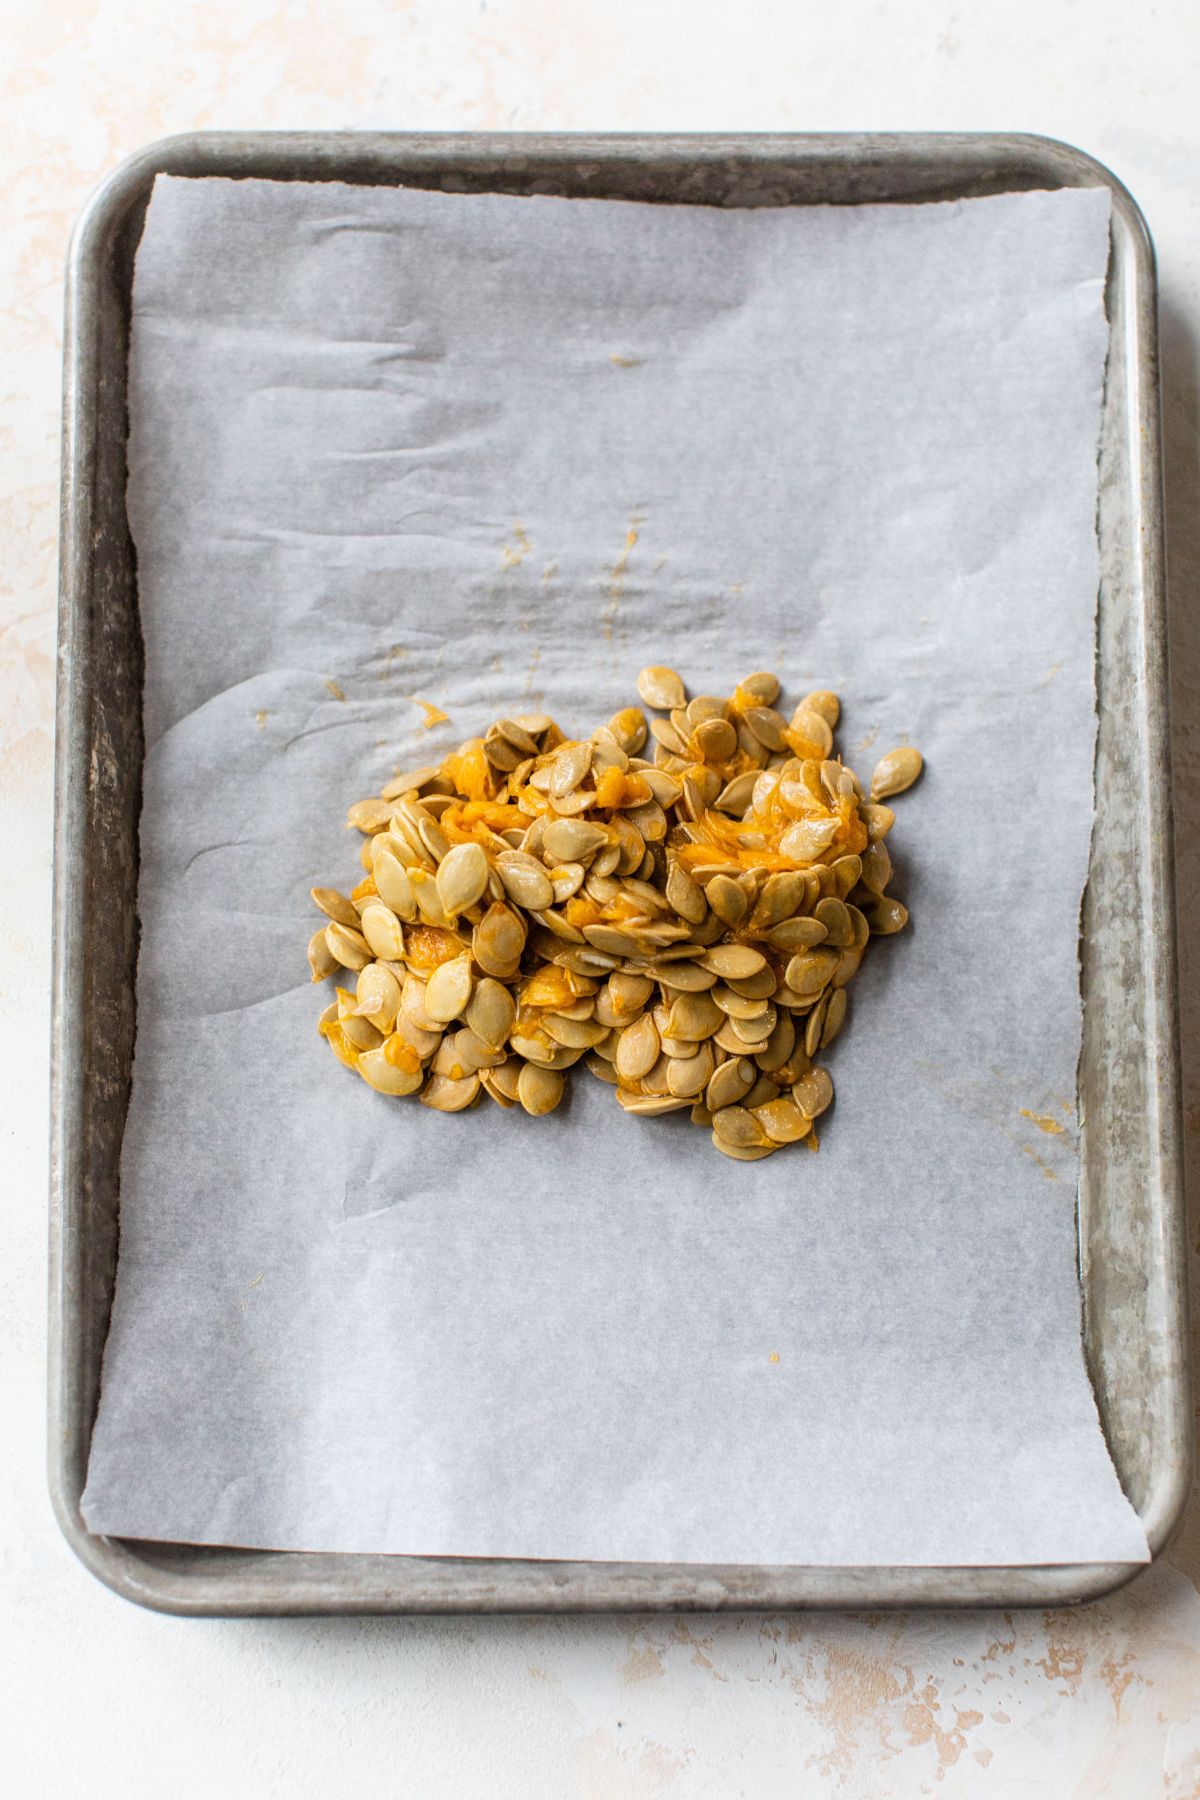 Transferring acorn squash seeds to a pan.